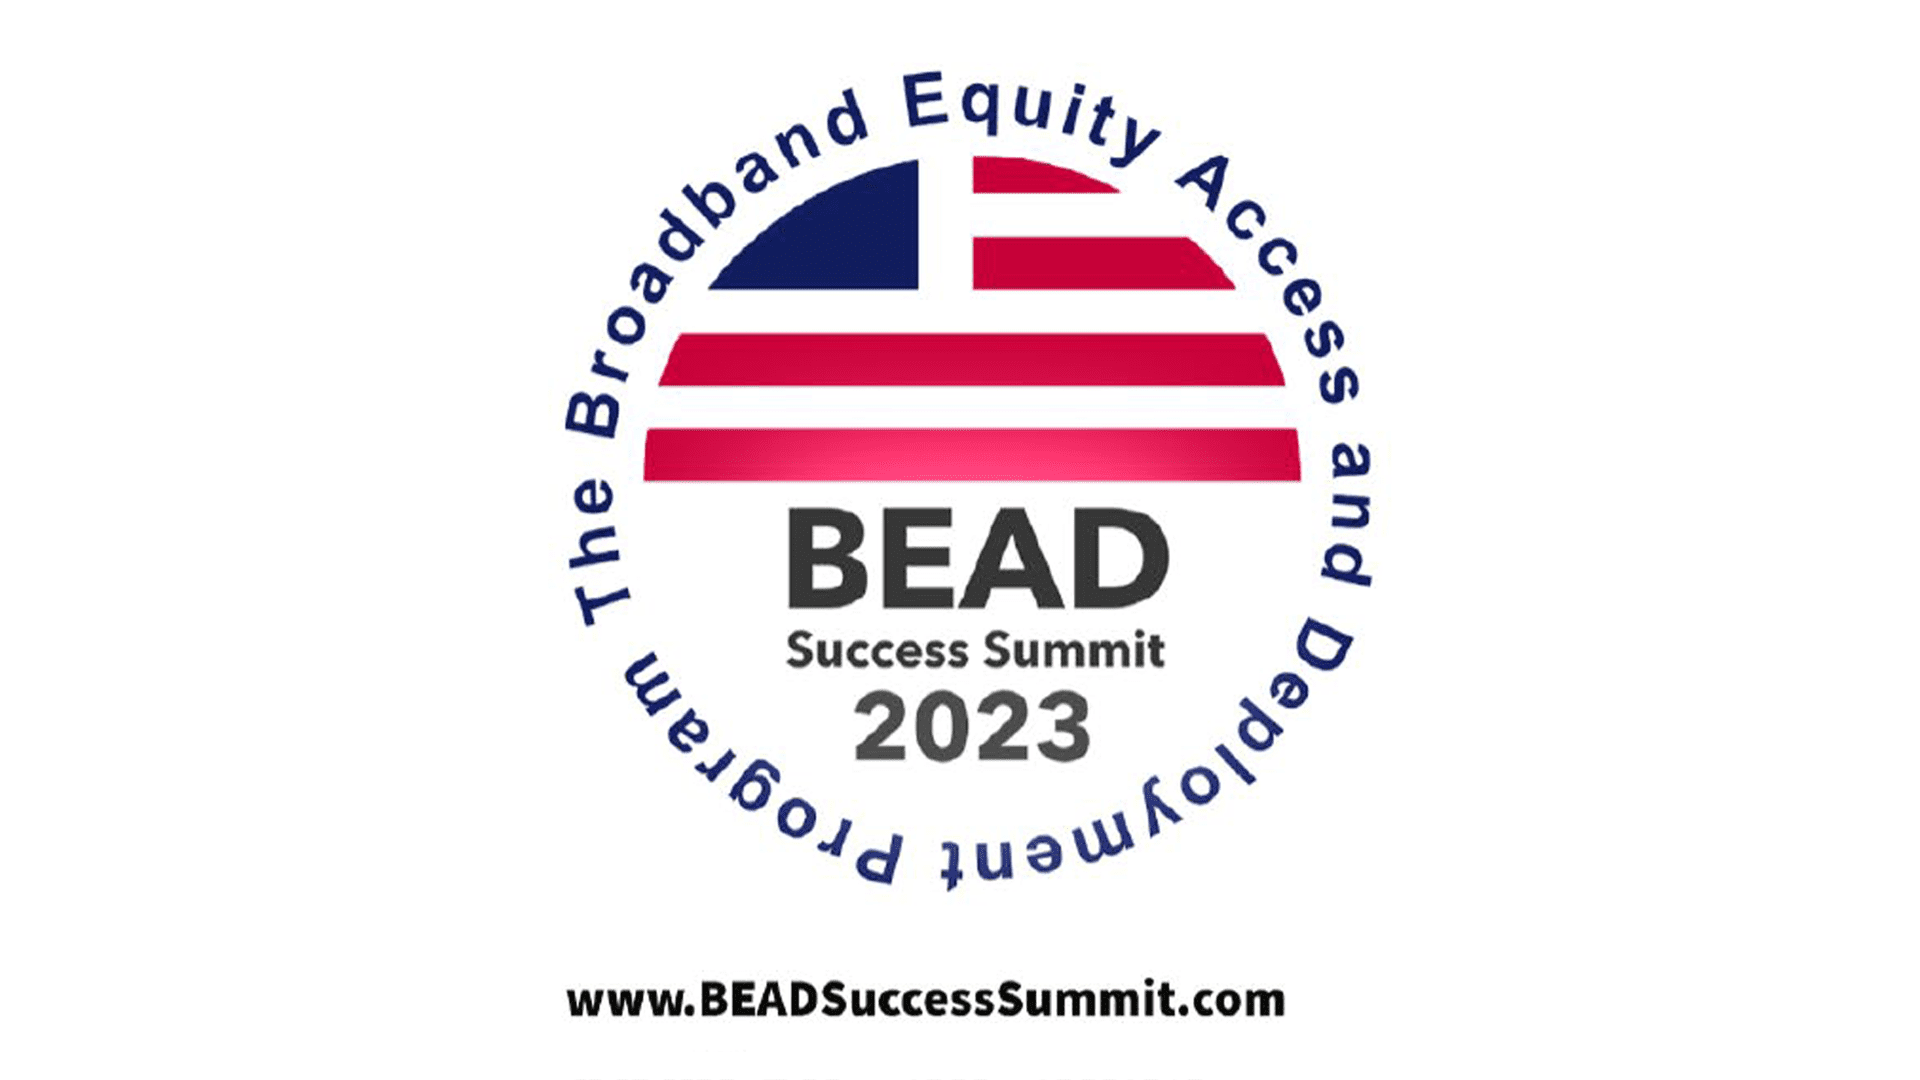 TIA BEAD Success Summit